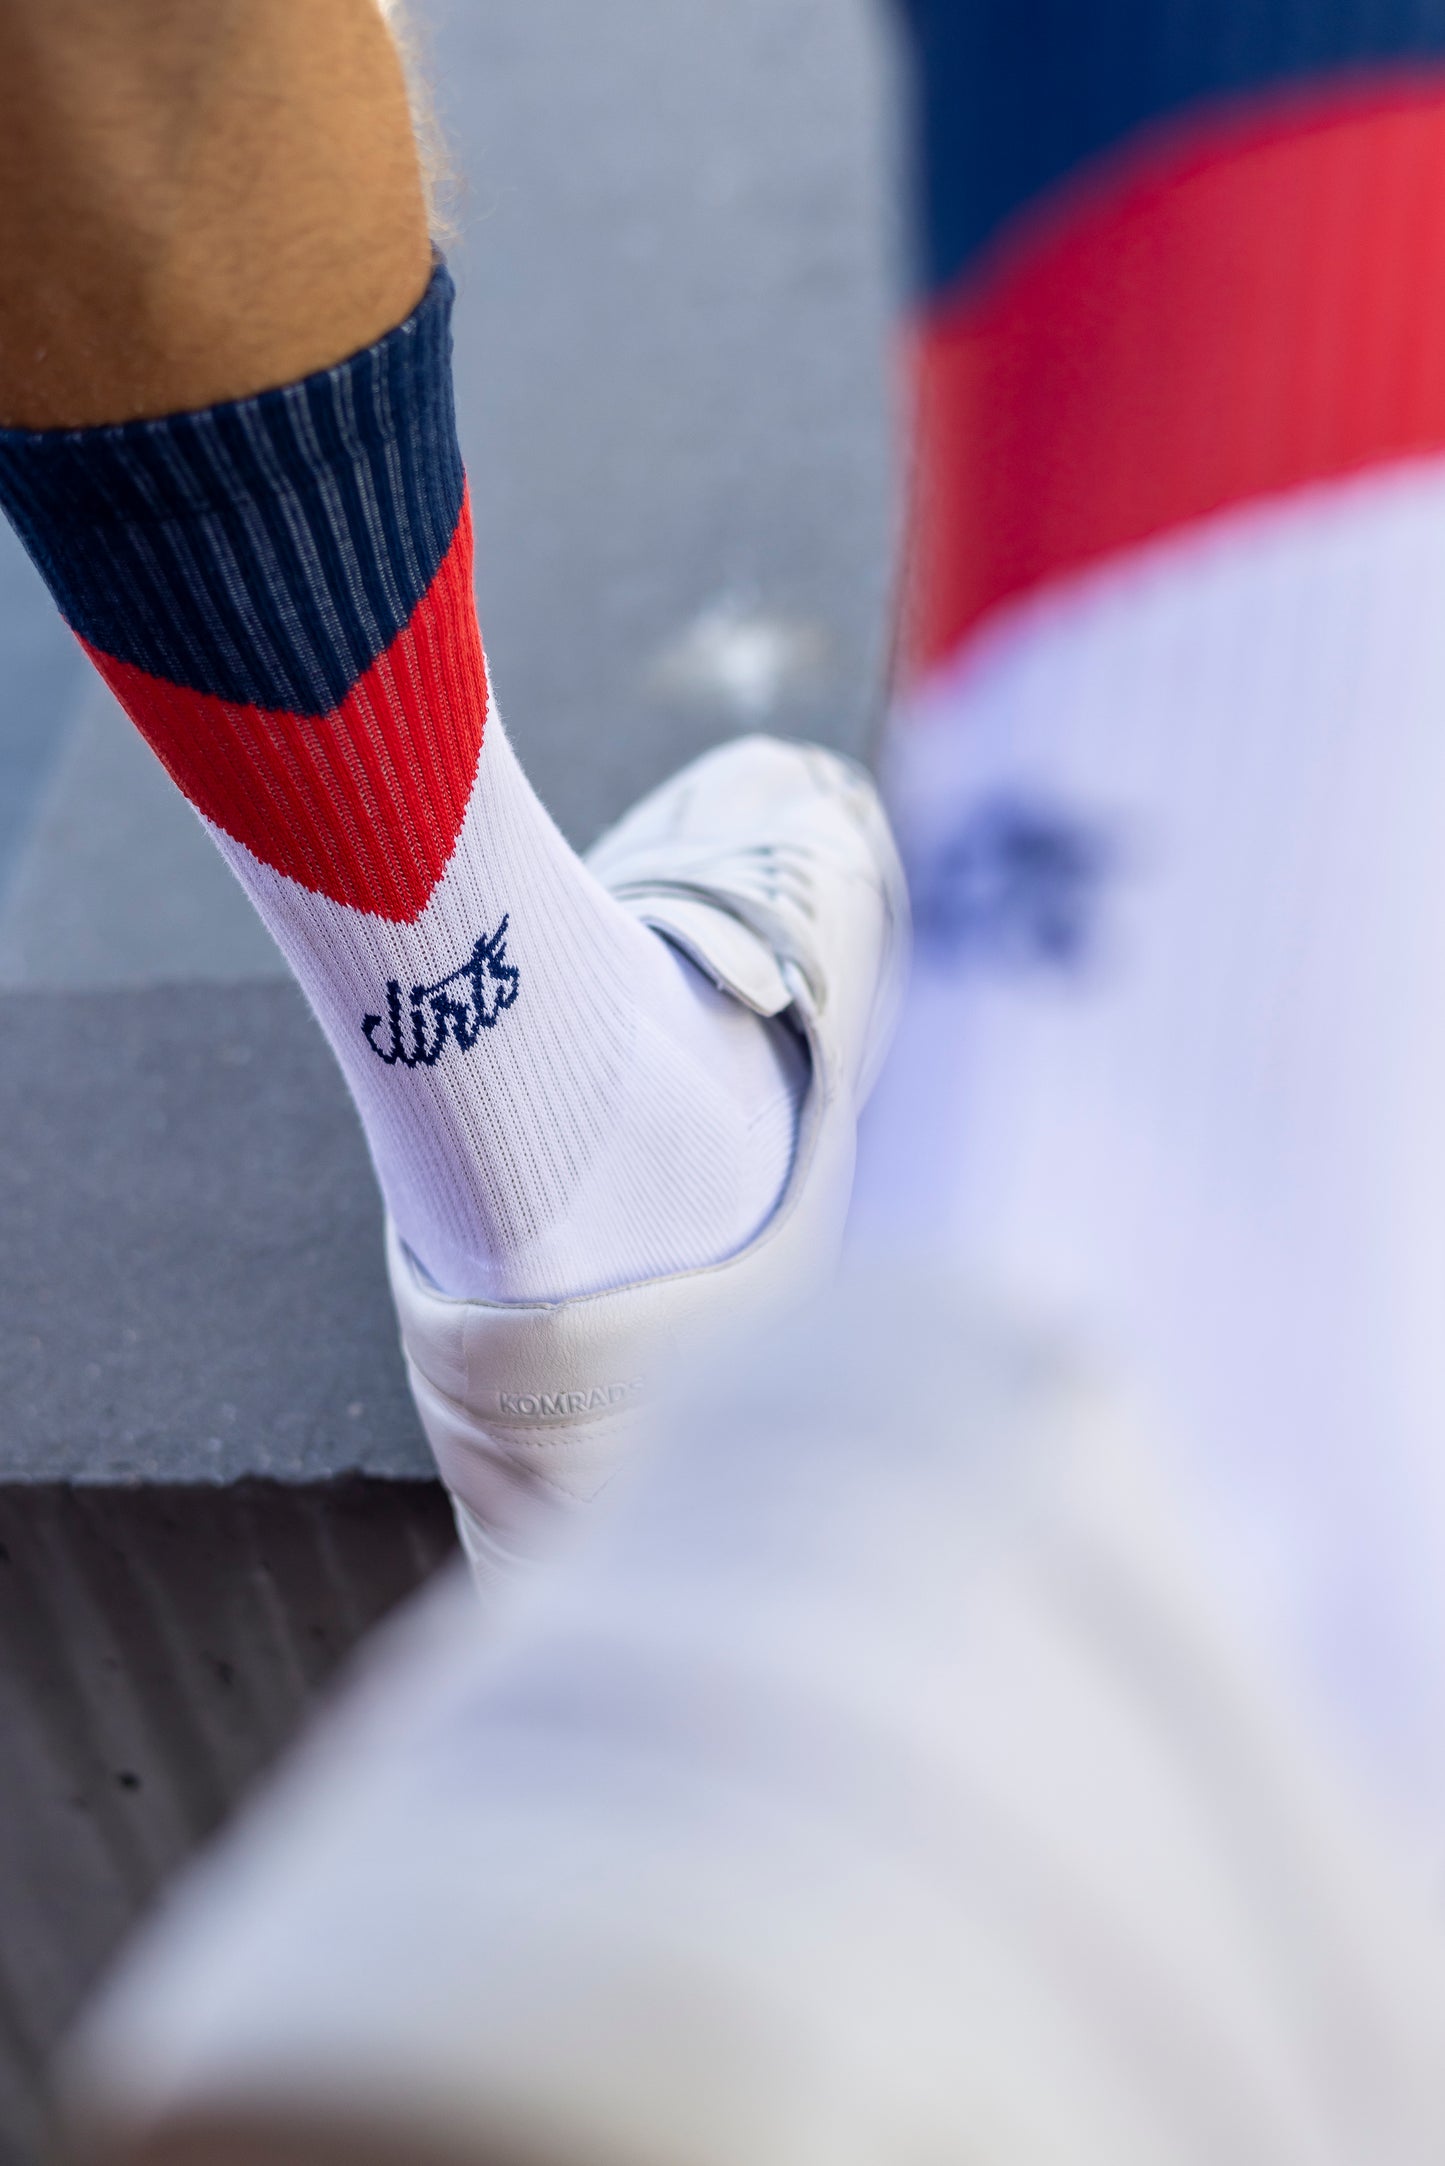 ZIG ZAG Socks, white/red/blue